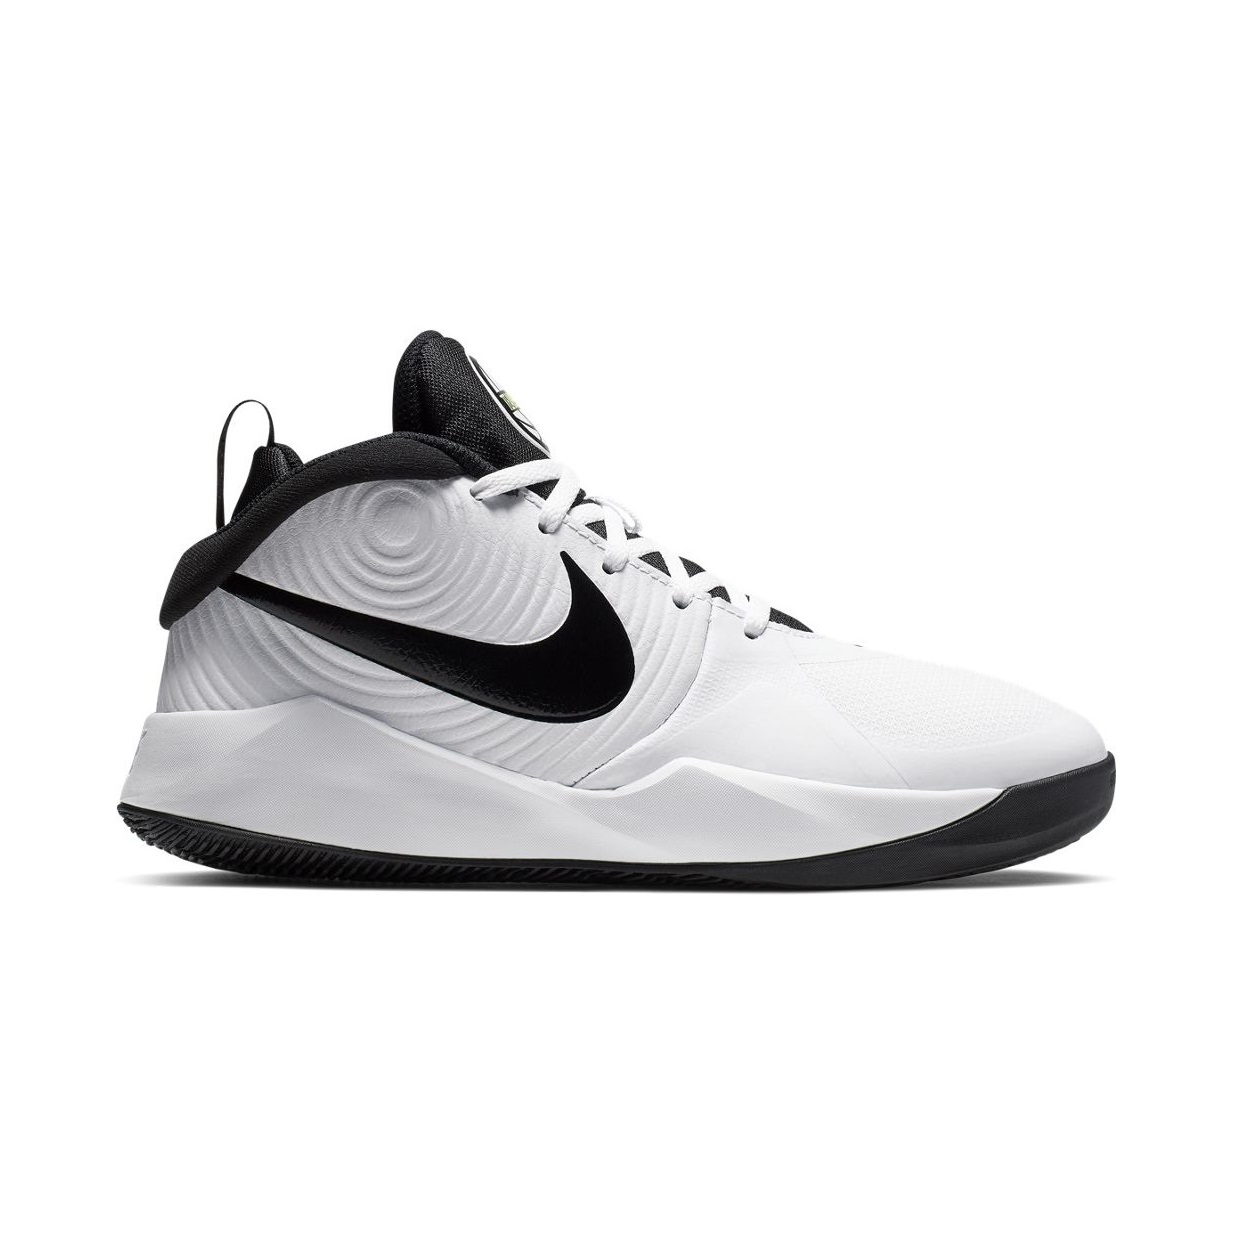 Zapatillas de baloncesto niño/a - Nike Team Hustle D 9 - AQ4224-100 | ferrersport.com | Tienda online de deportes